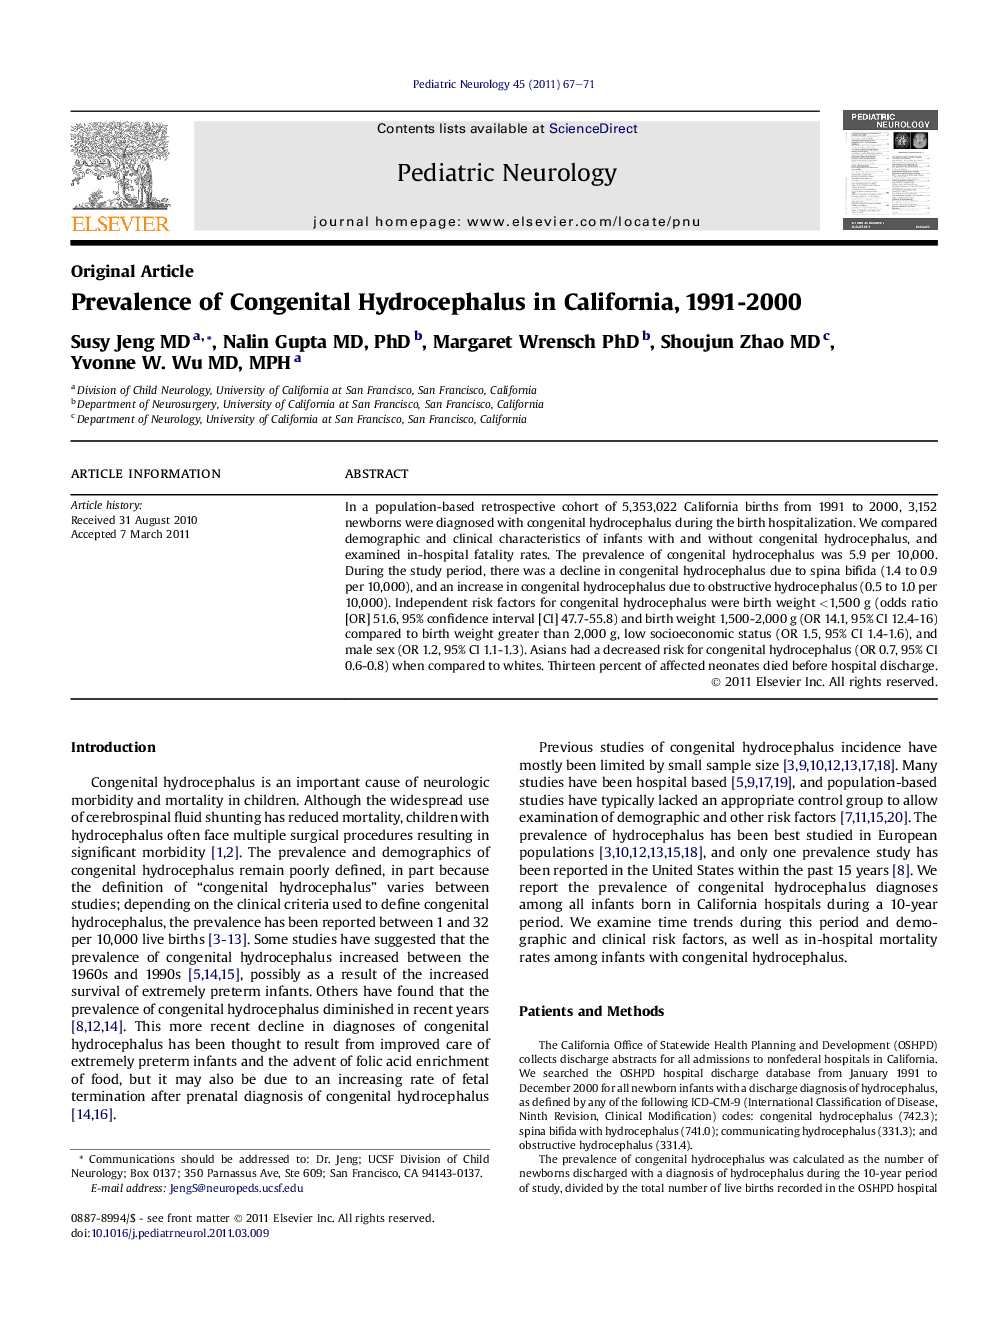 Prevalence of Congenital Hydrocephalus in California, 1991-2000